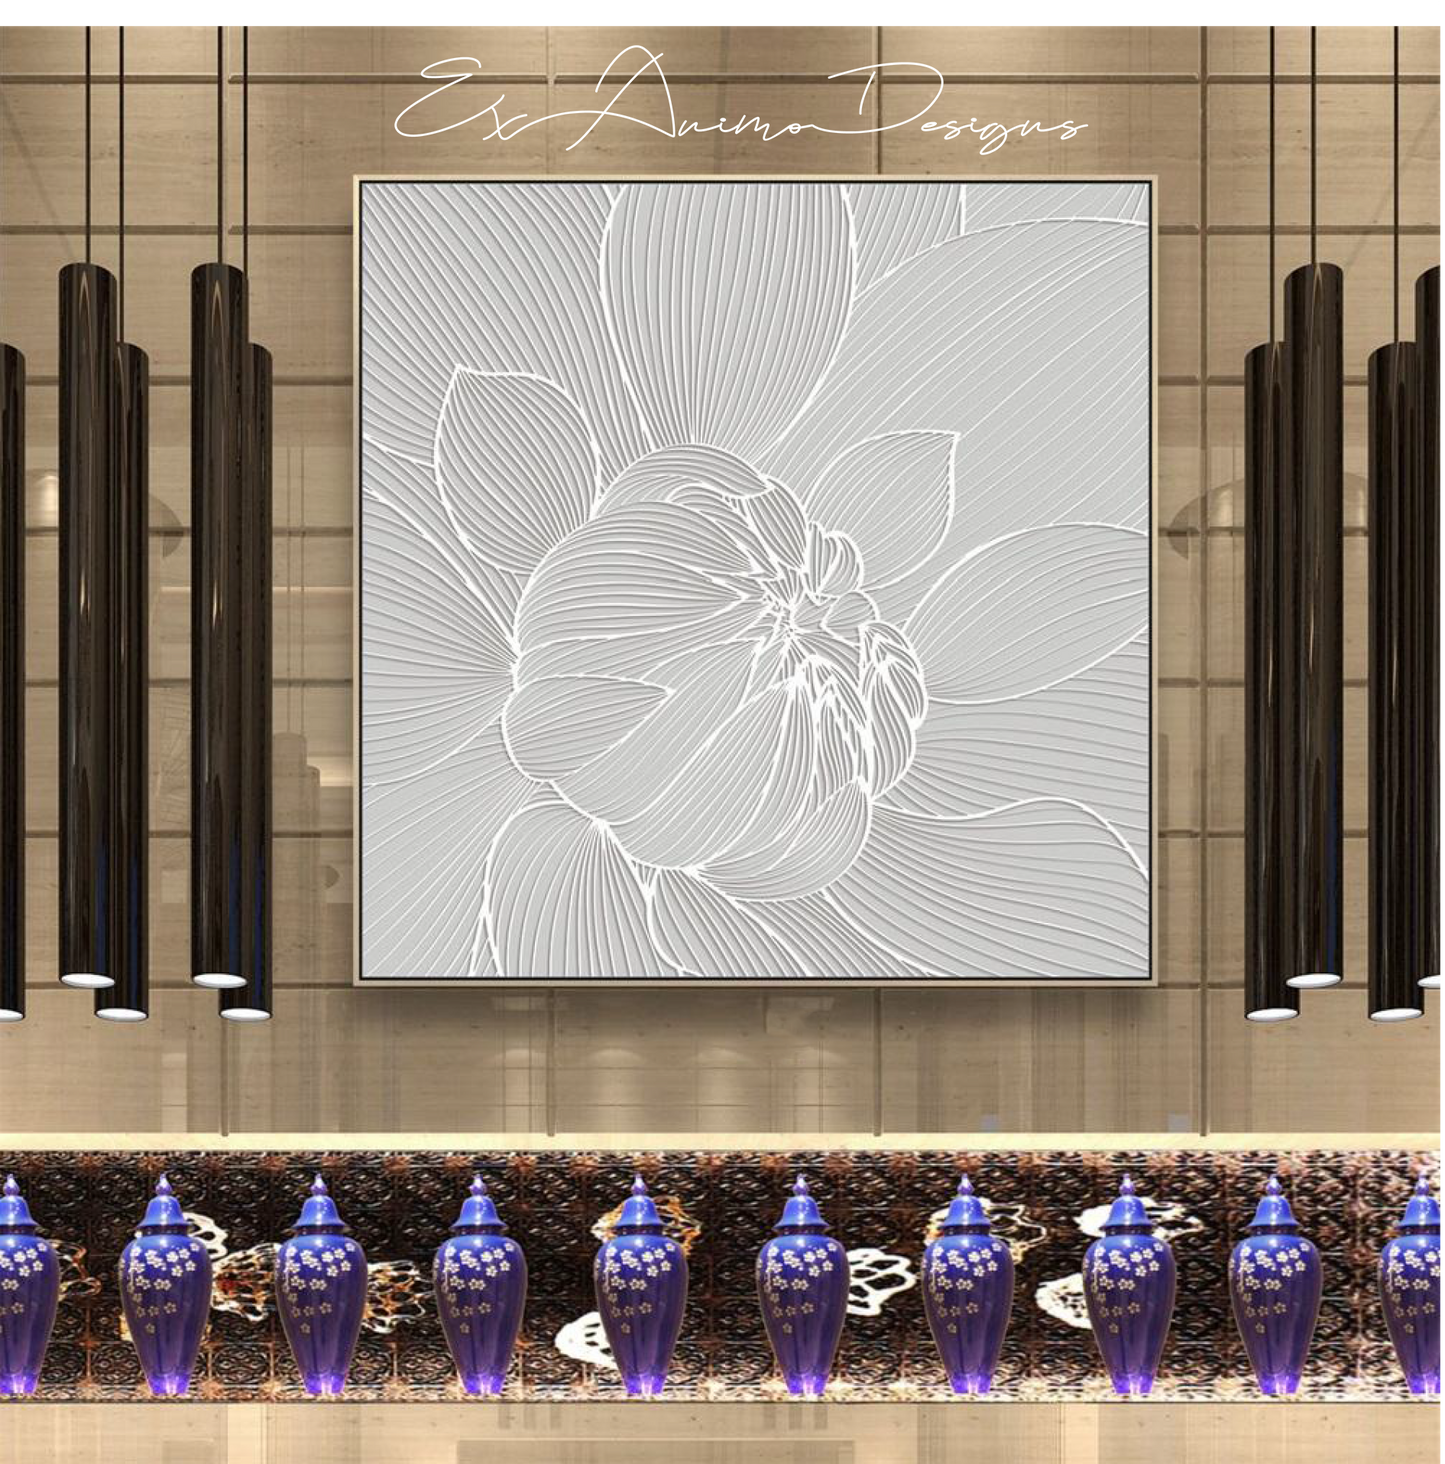 Ex Animo Designs - Lotus Flower Textured Modern Wall Art